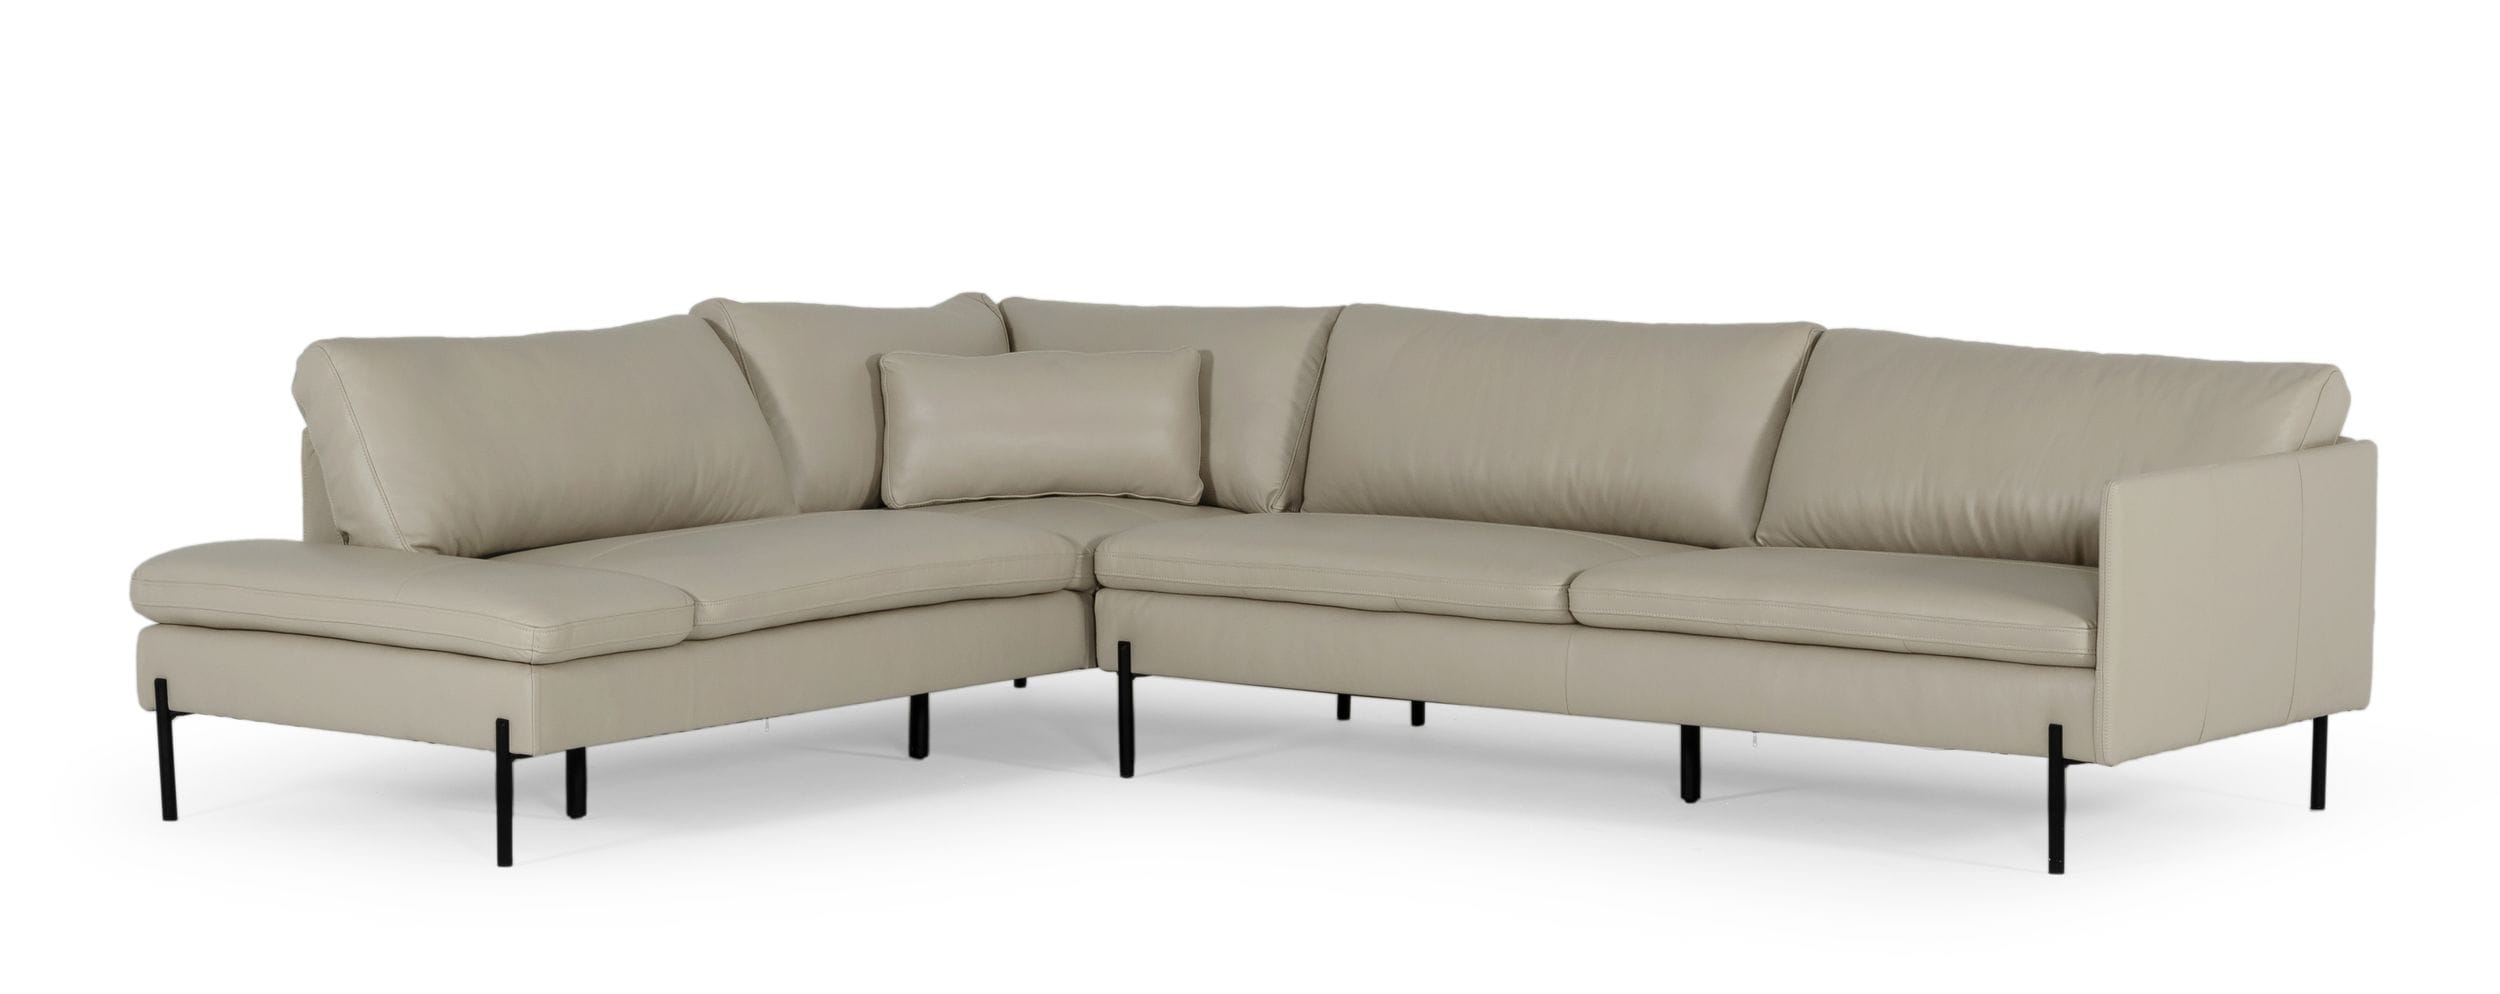 Divani Casa Sherry - Modern Grey Leather Left Facing Sectional Sofa-Sectional Sofa-VIG-Wall2Wall Furnishings